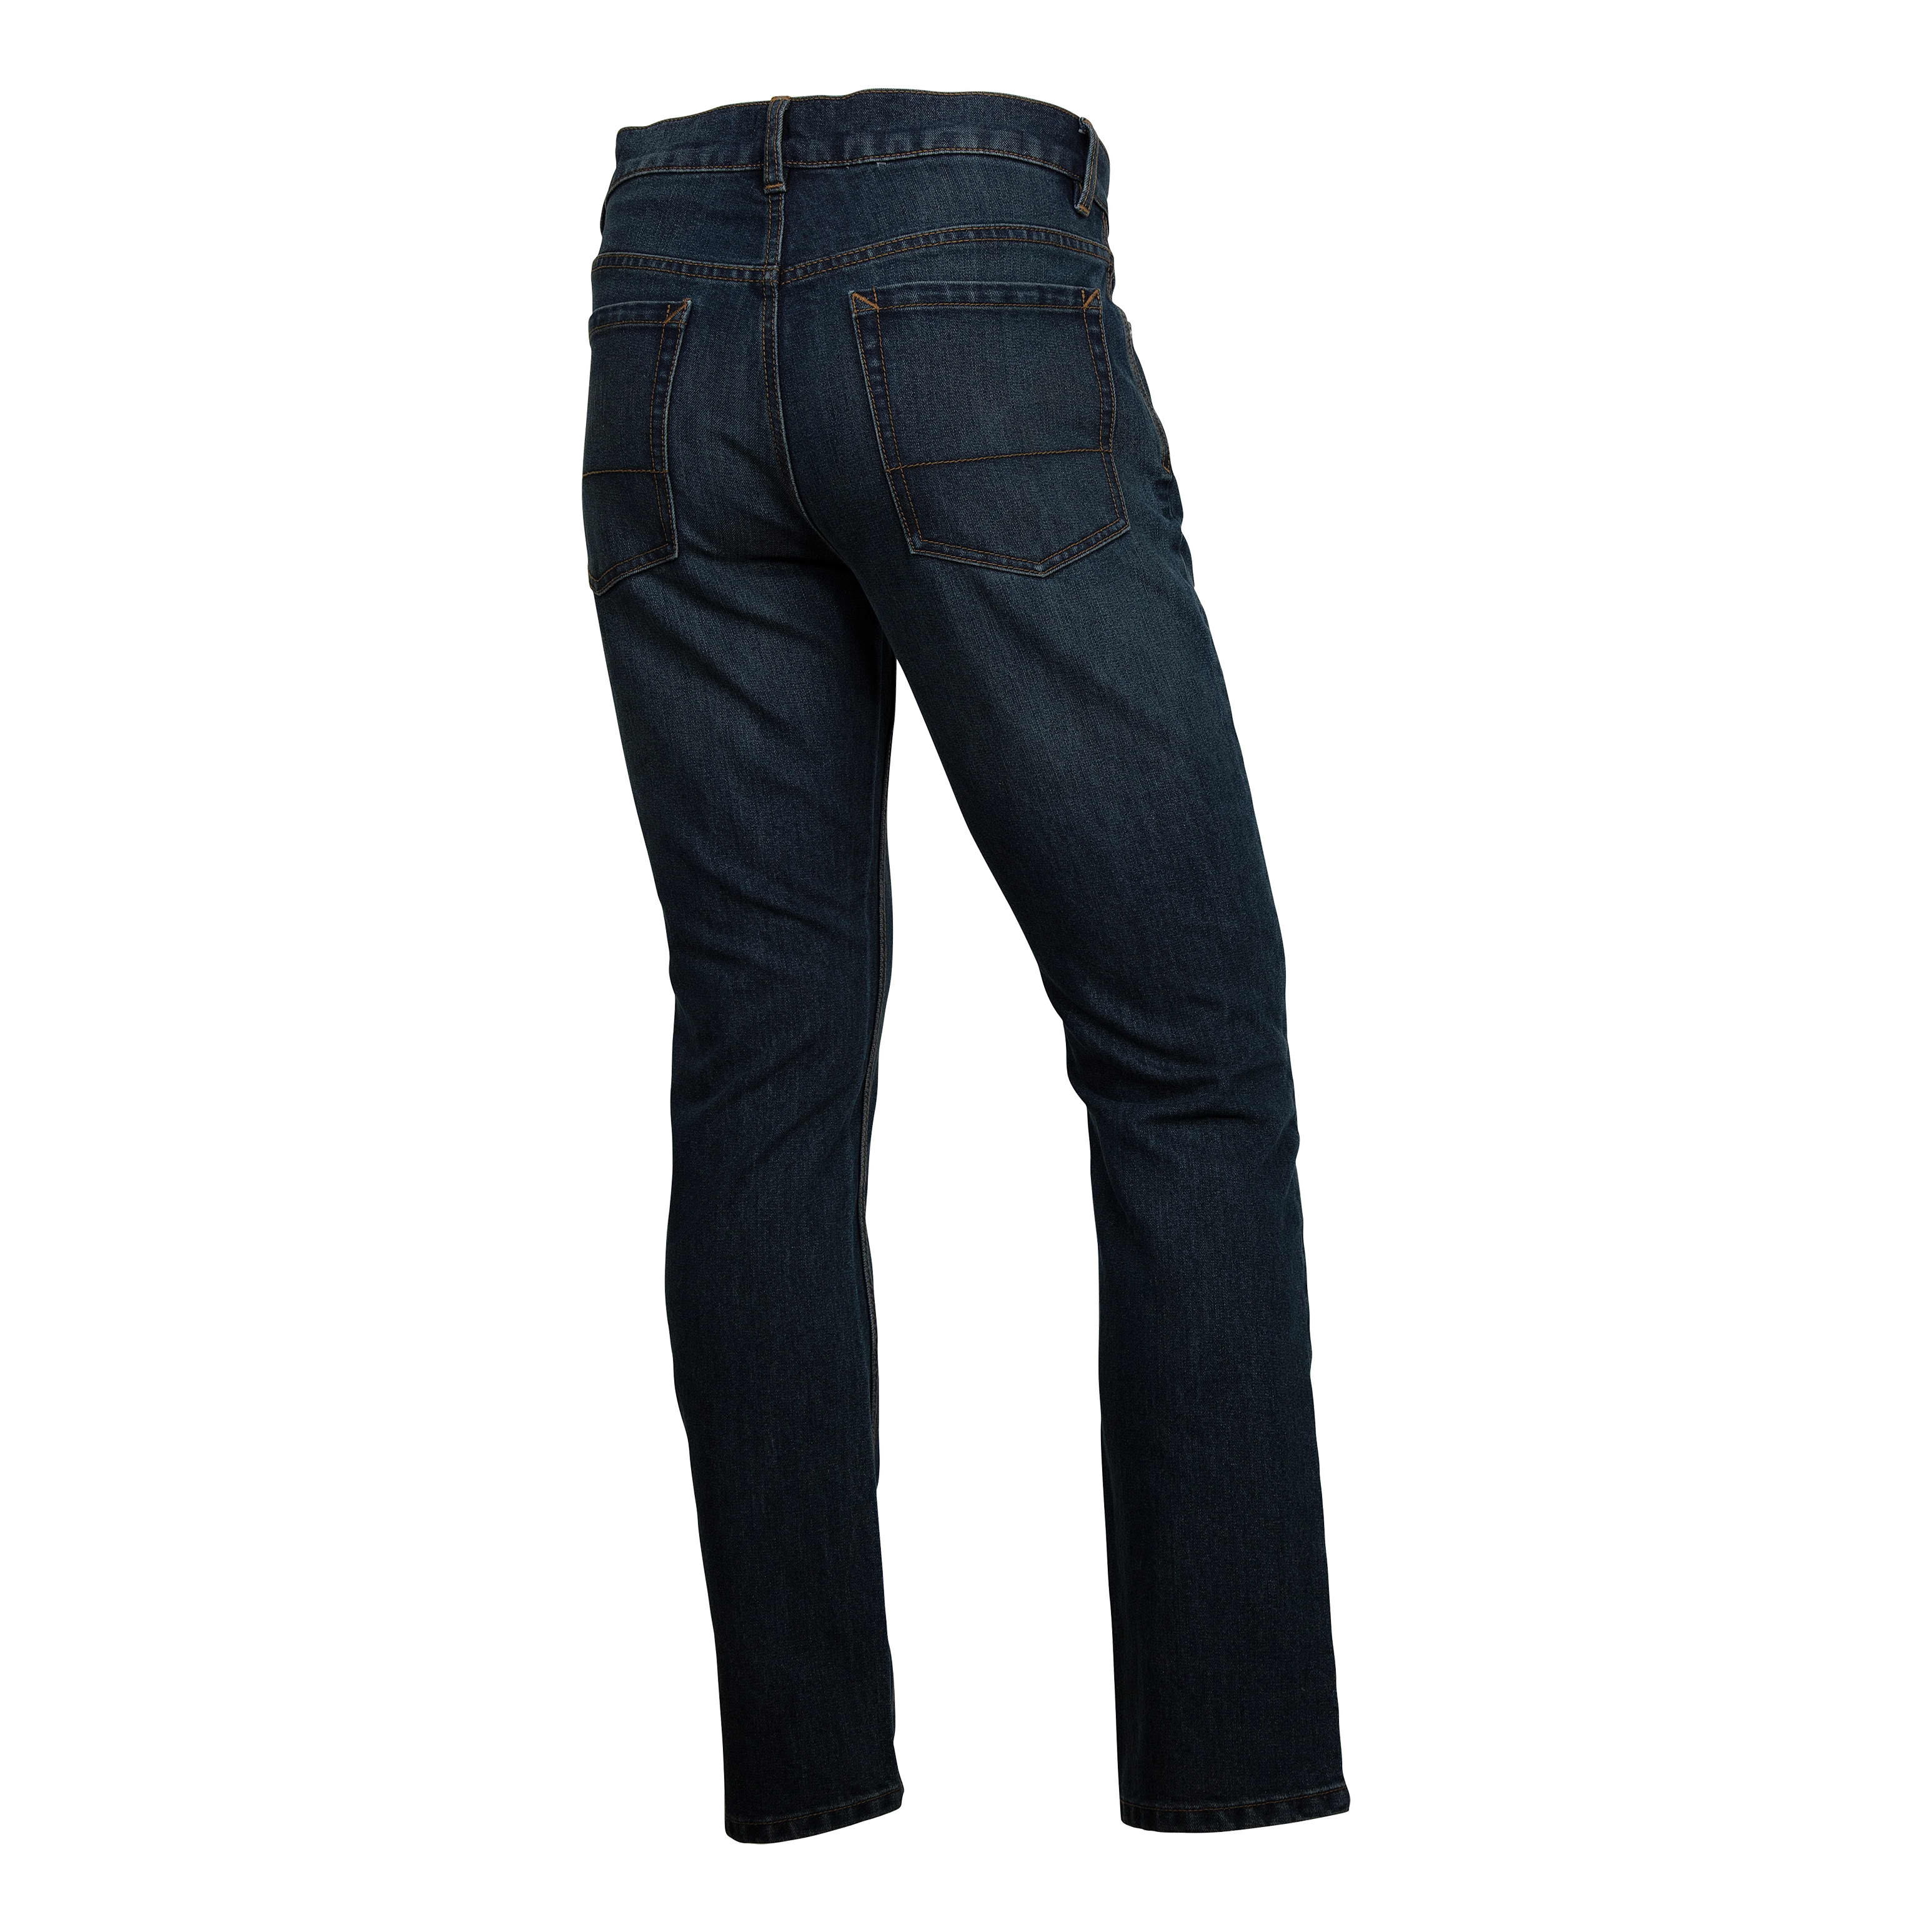 RedHead® Men’s Classic Flex FIT Denim Jeans - back,RedHead® Men’s Classic Flex FIT Denim Jeans - back